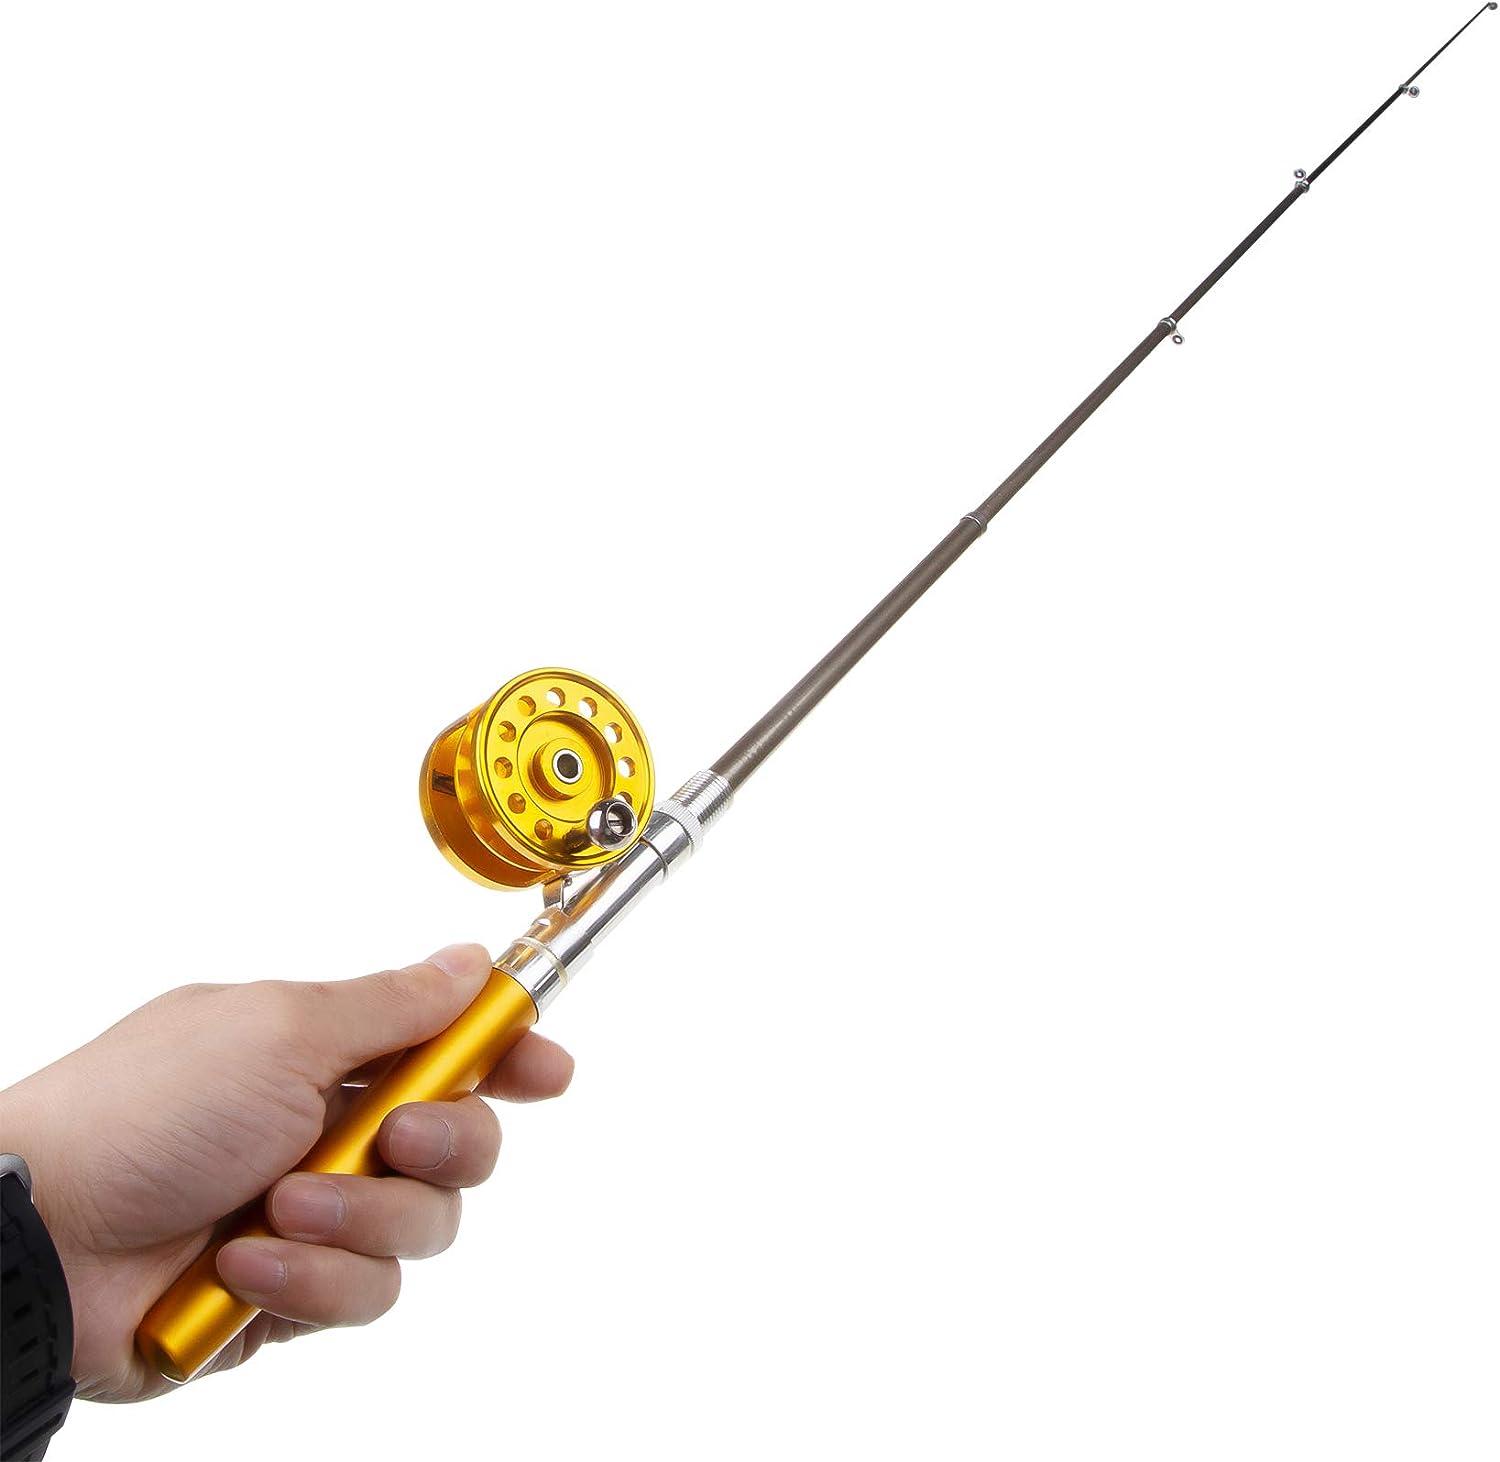 Mini Portable Pen Fishing Rod, Perfect For Ice Fishing